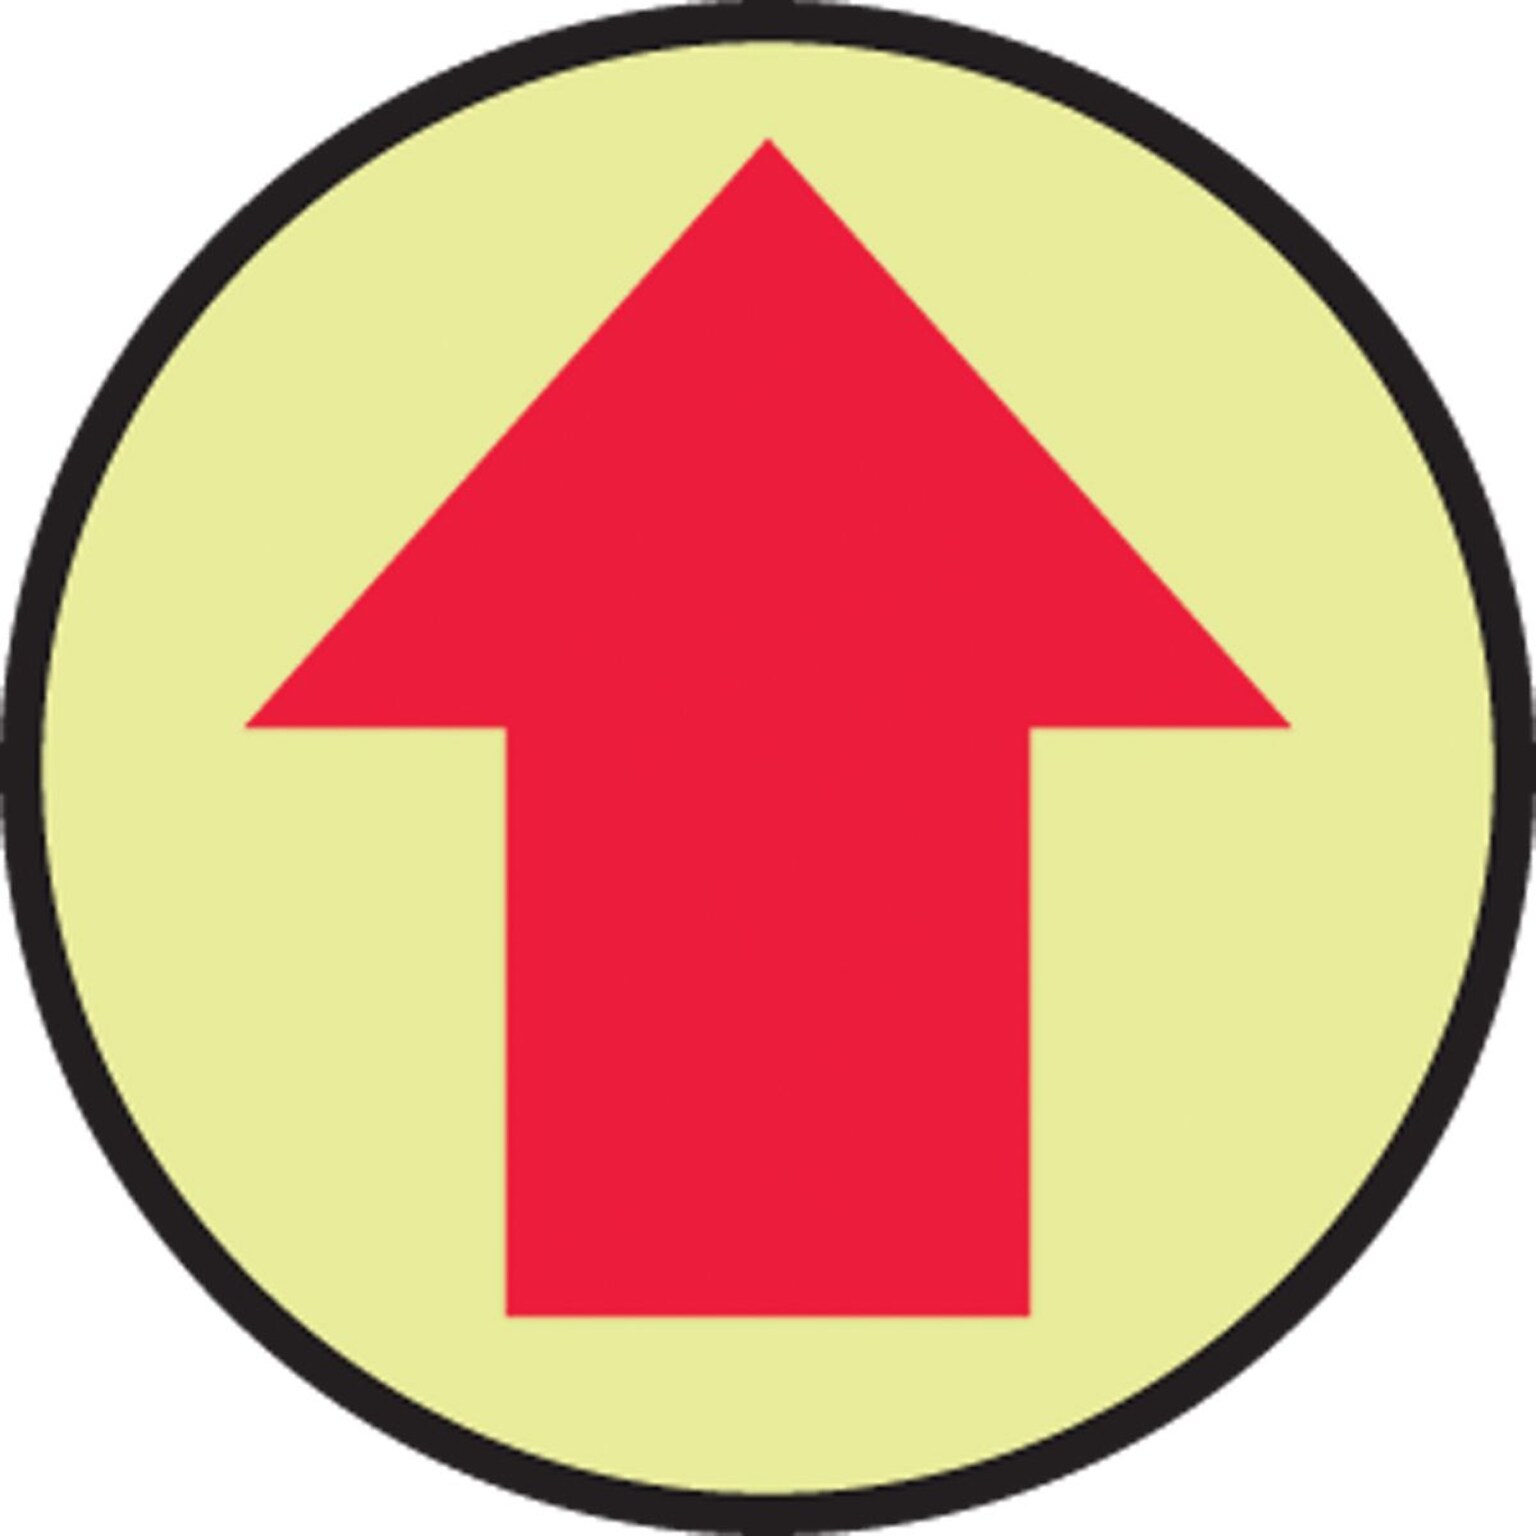 Accuform Slip-Gard Arrow Pictorial Round Floor Sign, Red/Yellow, 8Dia. (MFS871)